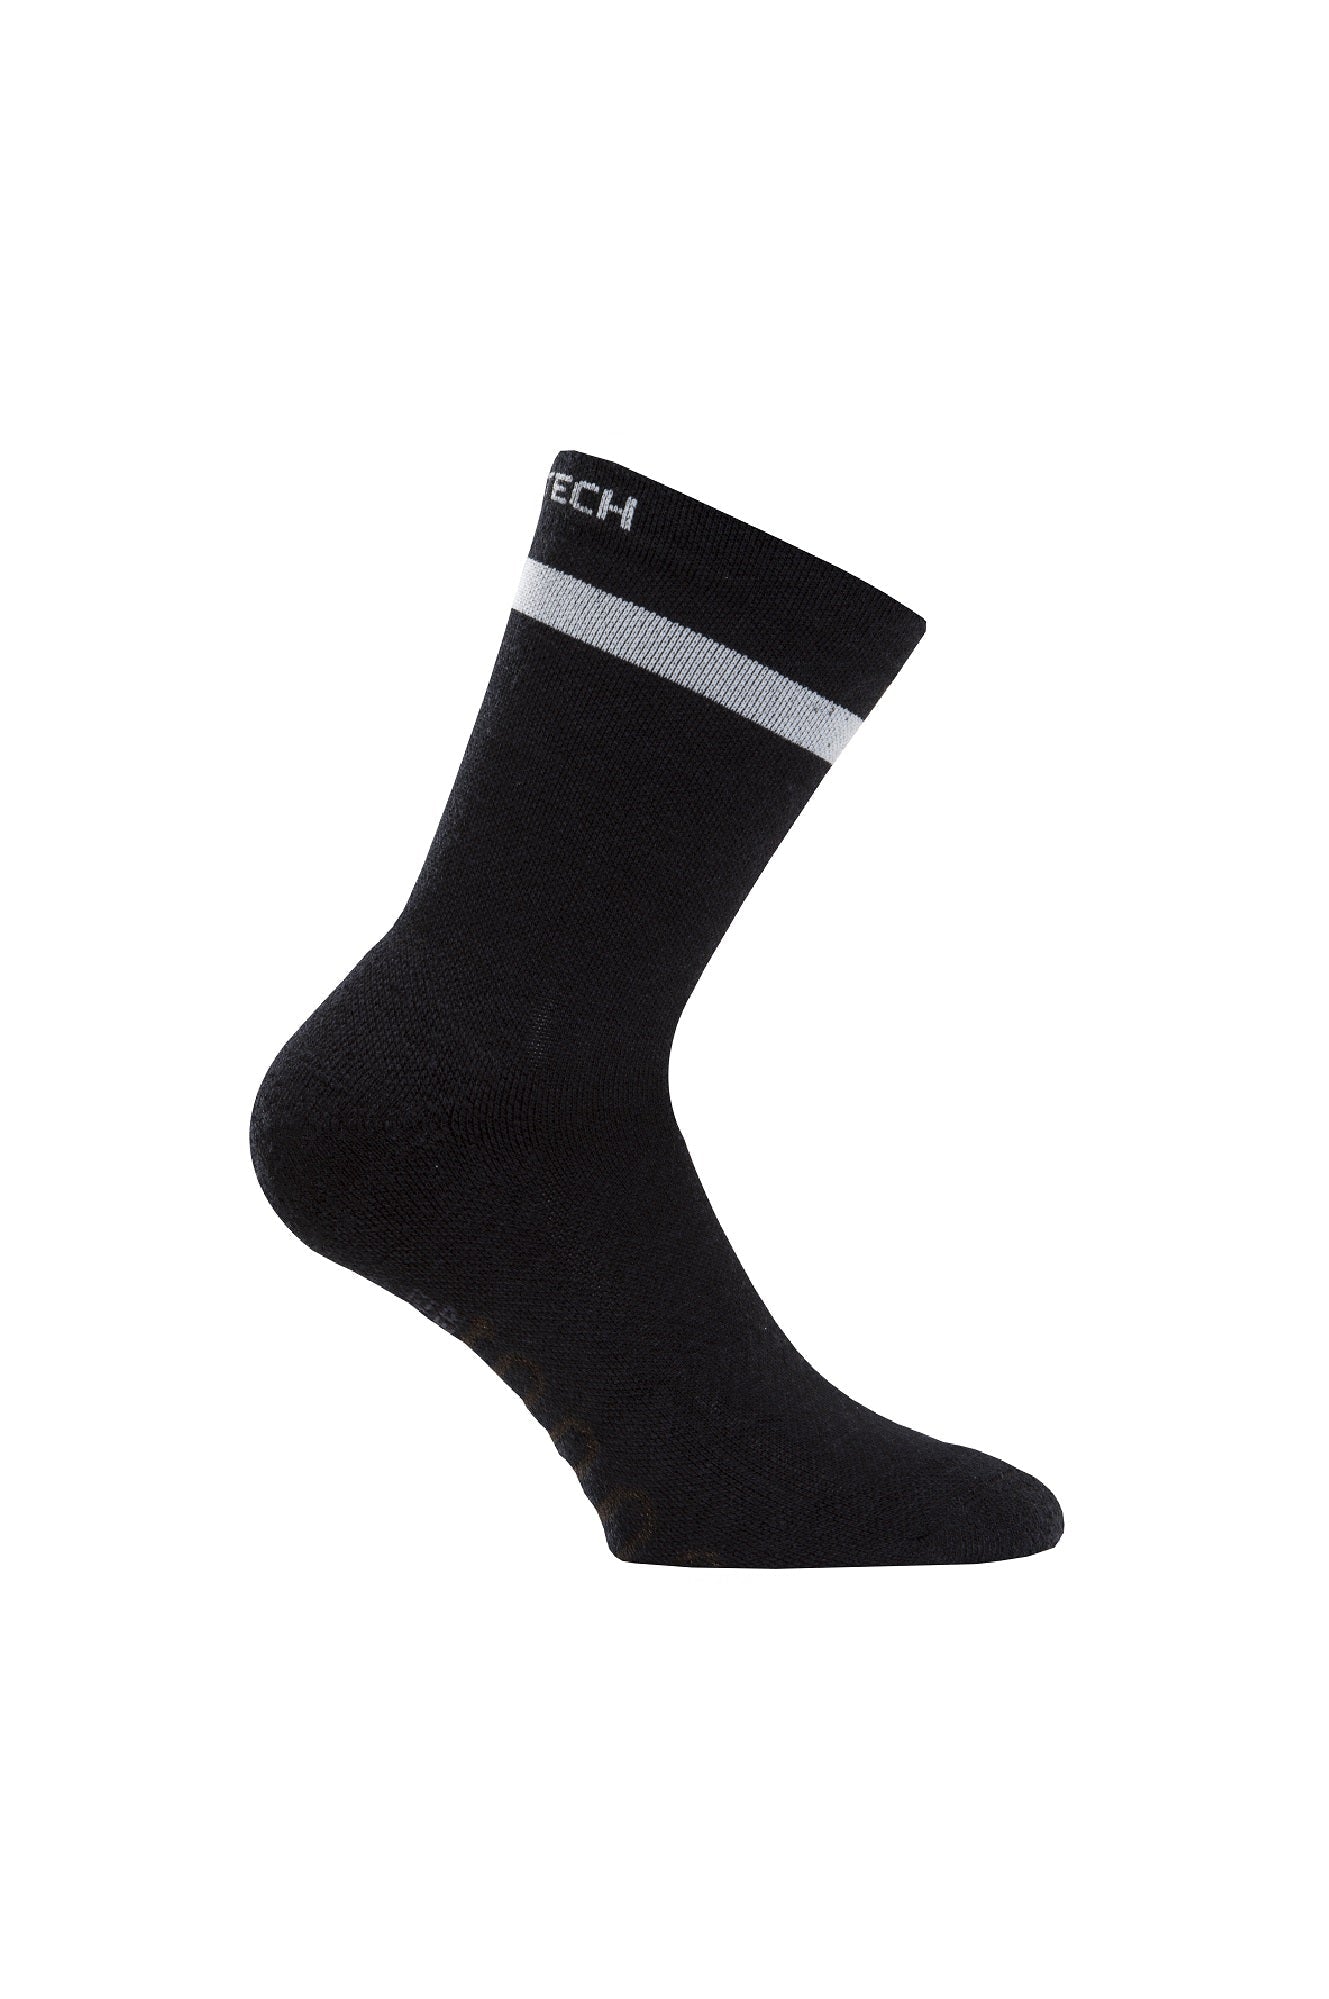 X-Tech XT120 sock